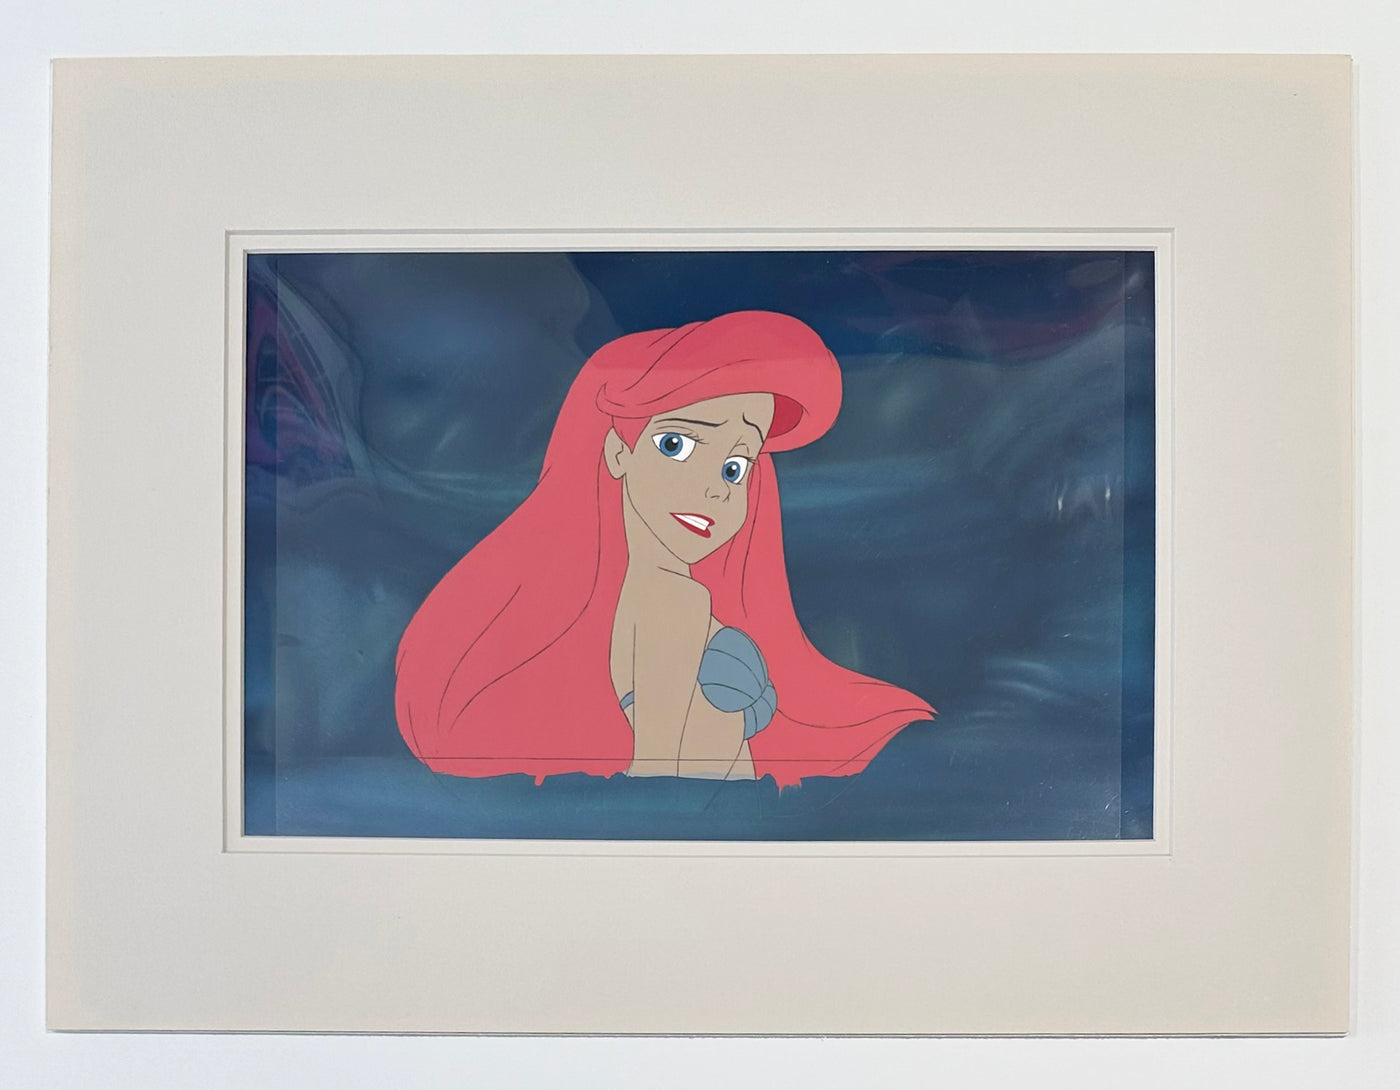 Original Walt Disney Production Cel from The Little Mermaid featuring Ariel